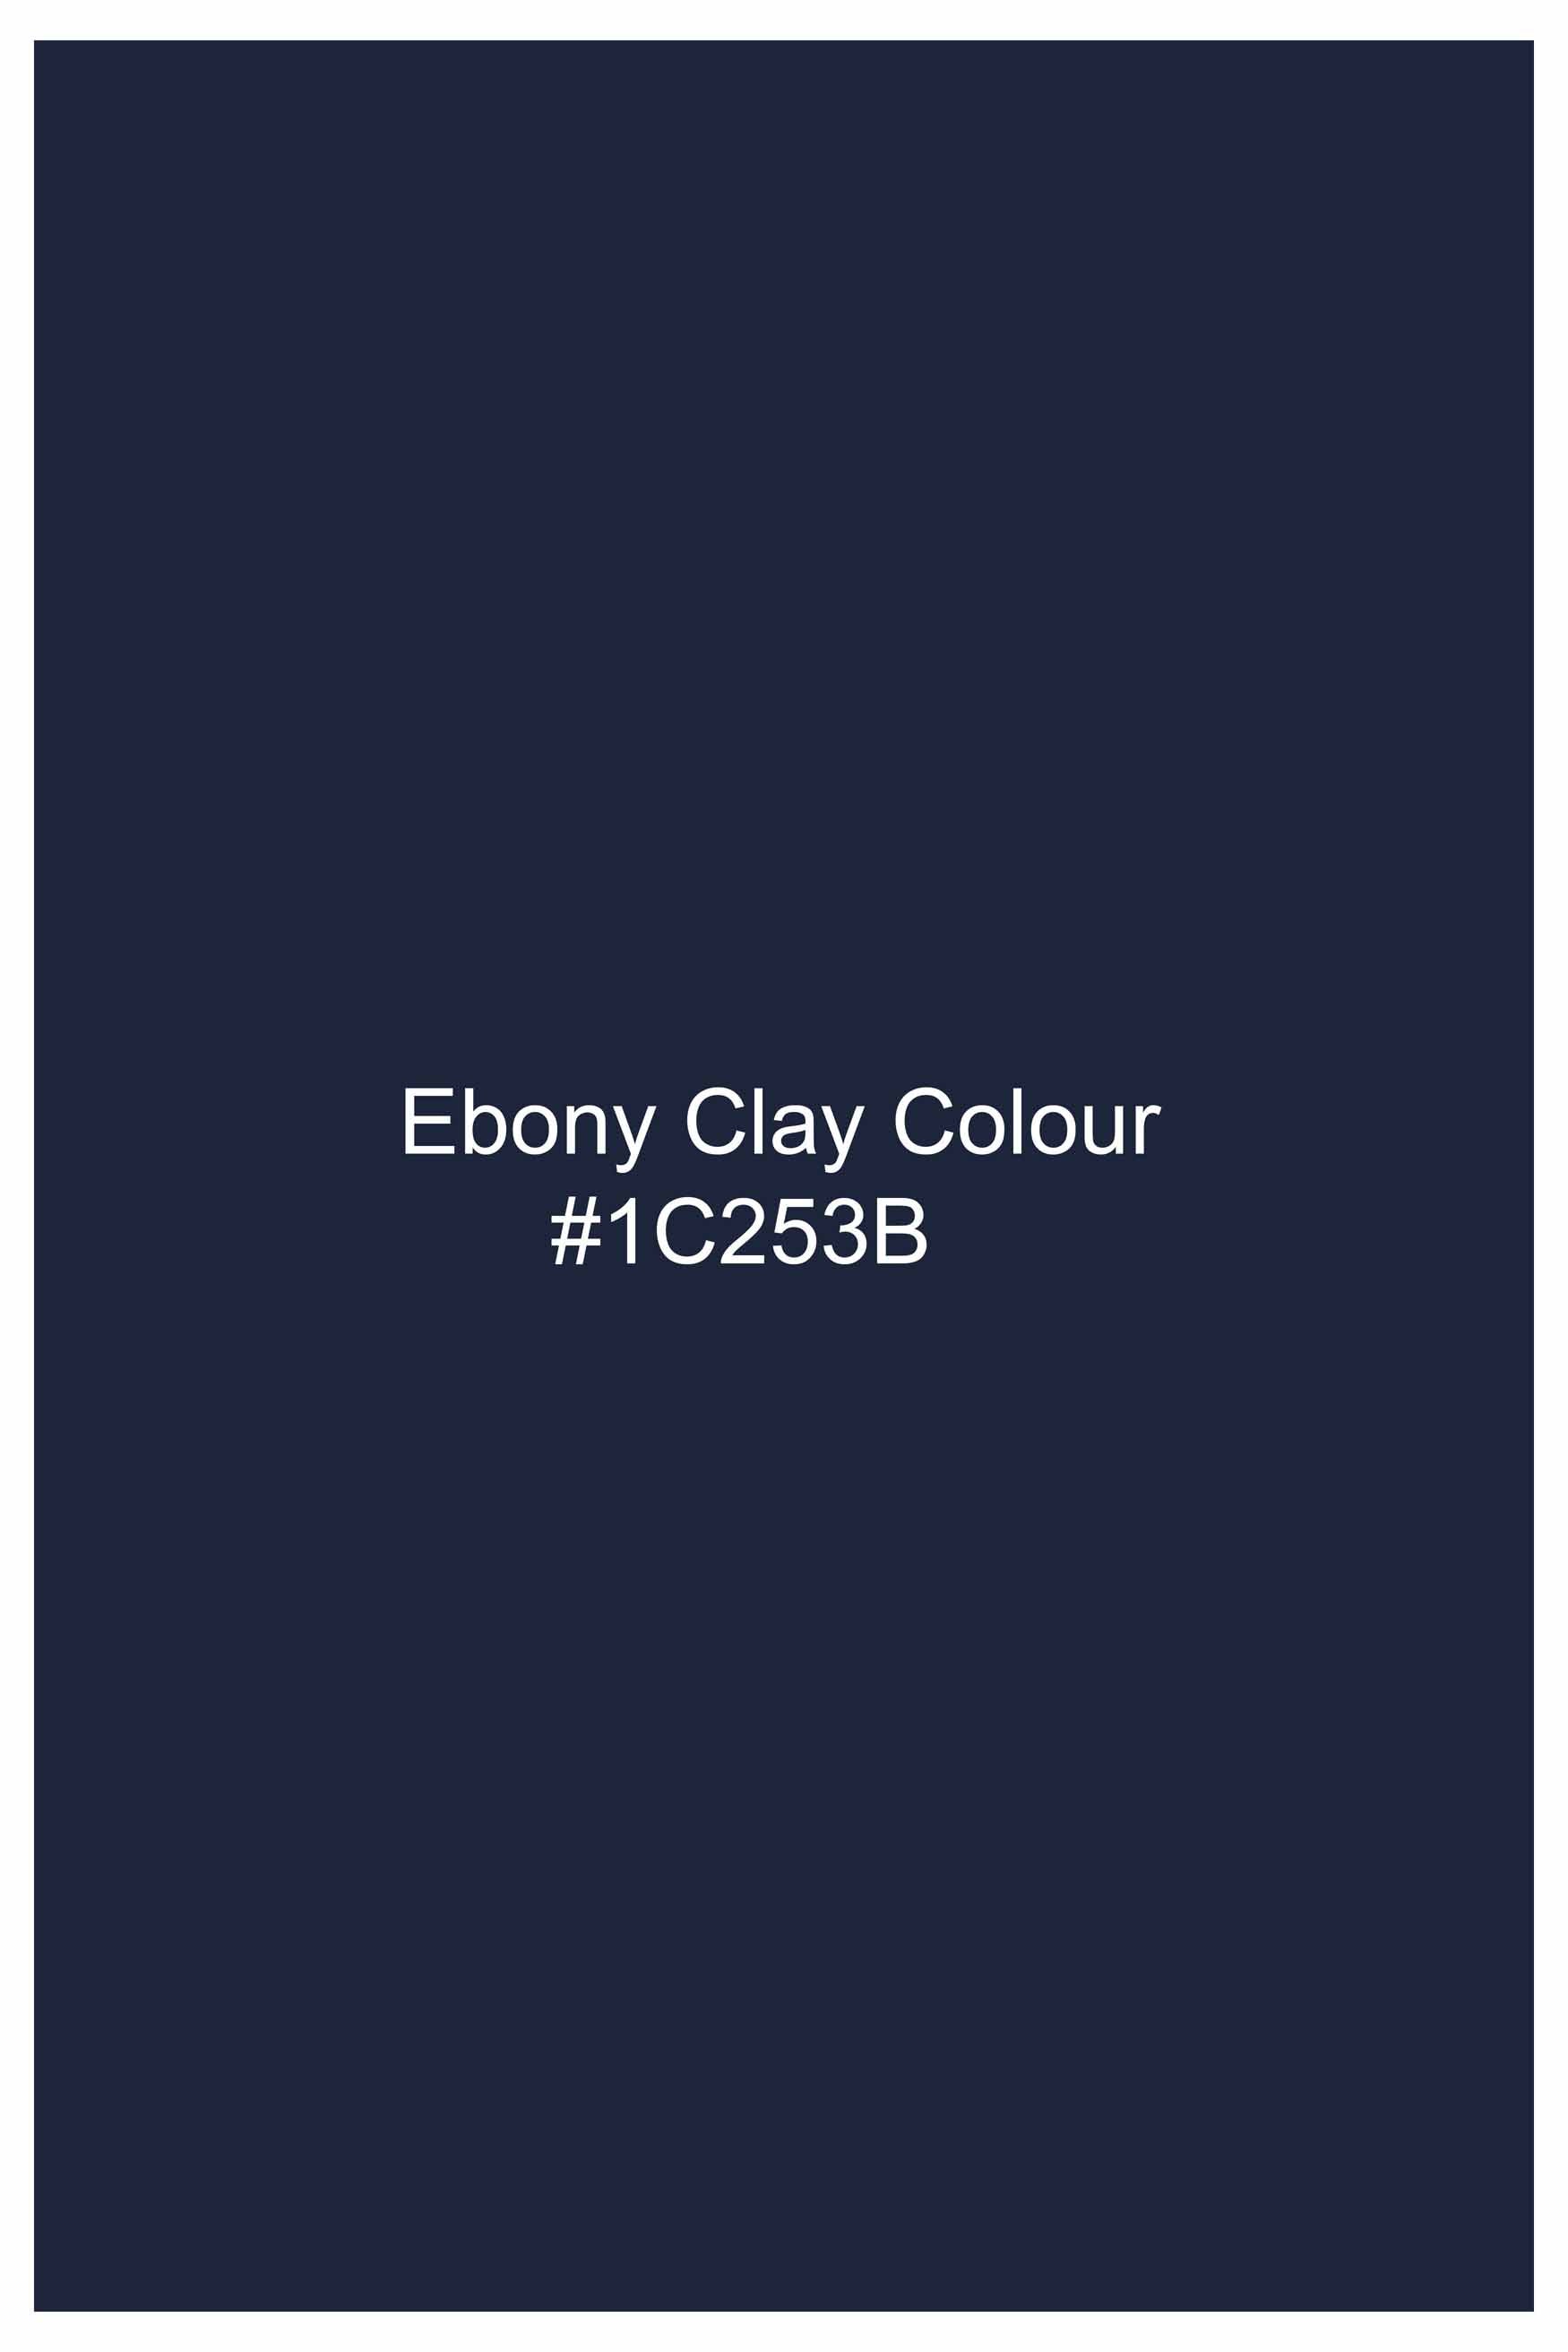 Ebony Clay Blue with Swan Hand Painted Luxurious Linen Designer Shirt 7056-BD-BLE-ART-38, 7056-BD-BLE-ART-H-38, 7056-BD-BLE-ART-39, 7056-BD-BLE-ART-H-39, 7056-BD-BLE-ART-40, 7056-BD-BLE-ART-H-40, 7056-BD-BLE-ART-42, 7056-BD-BLE-ART-H-42, 7056-BD-BLE-ART-44, 7056-BD-BLE-ART-H-44, 7056-BD-BLE-ART-46, 7056-BD-BLE-ART-H-46, 7056-BD-BLE-ART-48, 7056-BD-BLE-ART-H-48, 7056-BD-BLE-ART-50, 7056-BD-BLE-ART-H-50, 7056-BD-BLE-ART-52, 7056-BD-BLE-ART-H-52